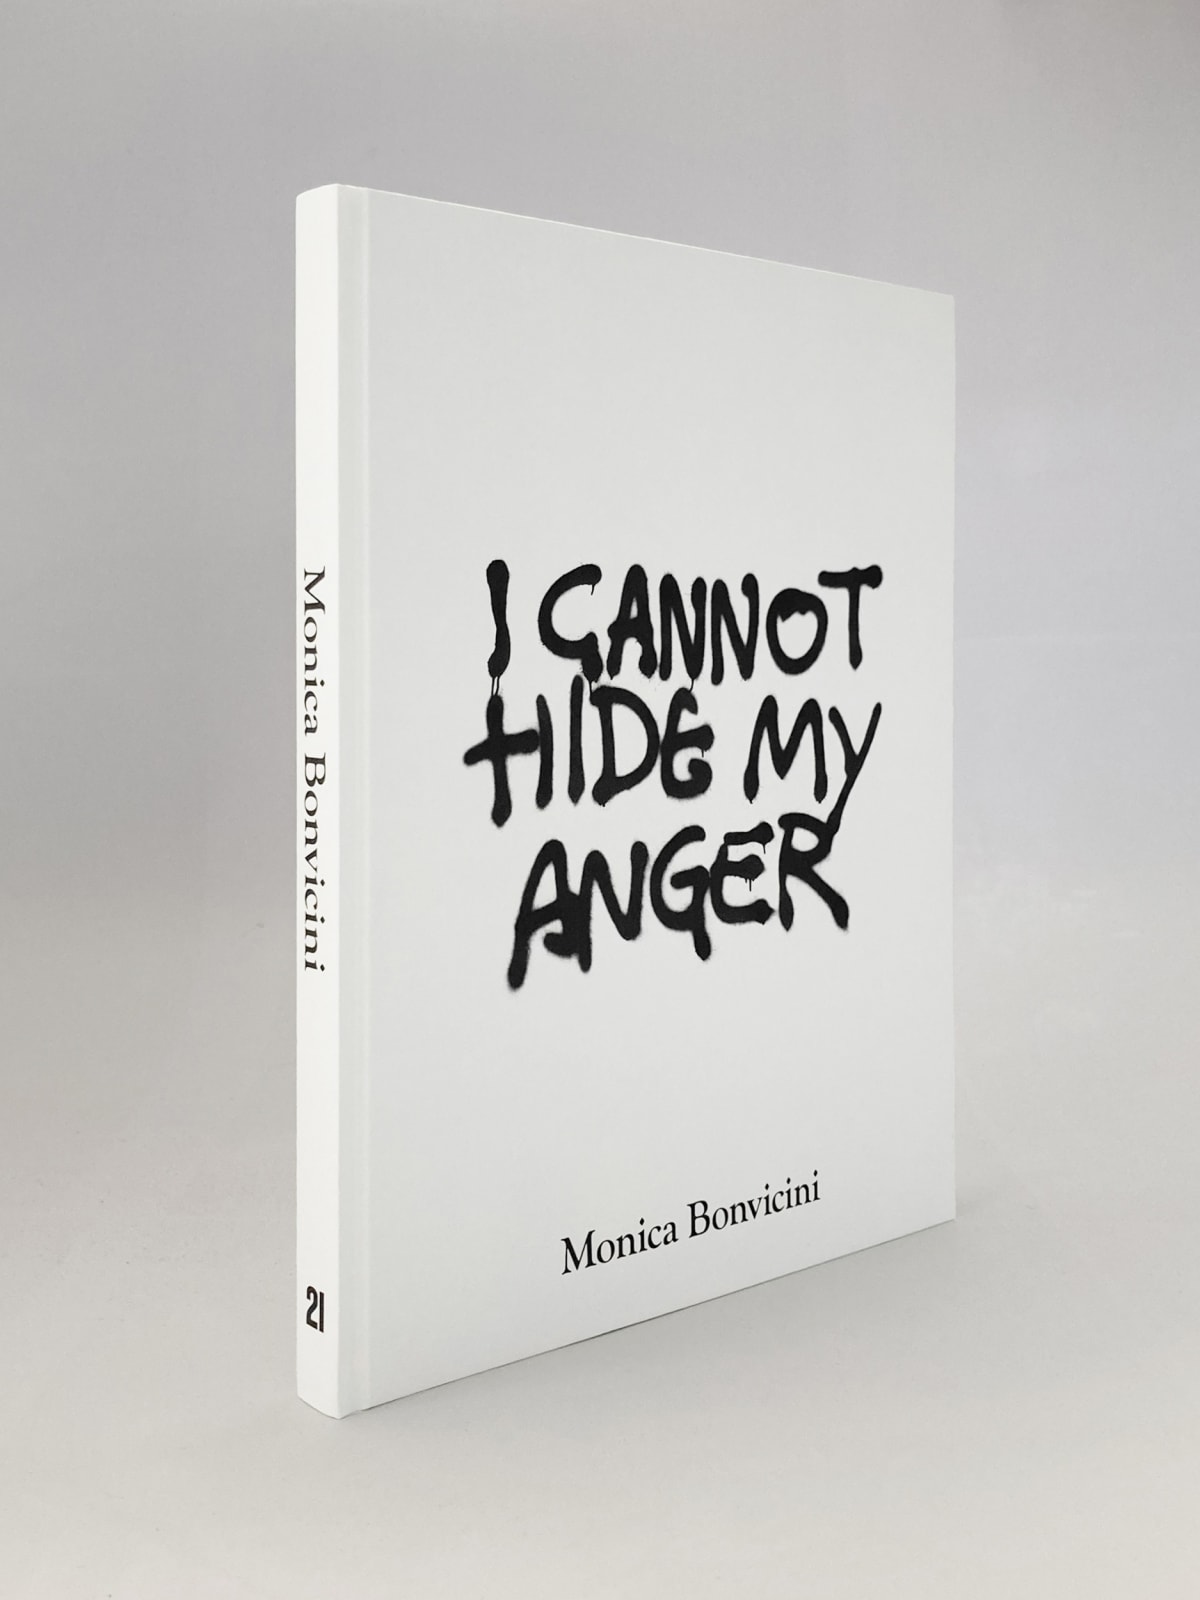 Monica Bonvicini: I CANNOT HIDE MY ANGER